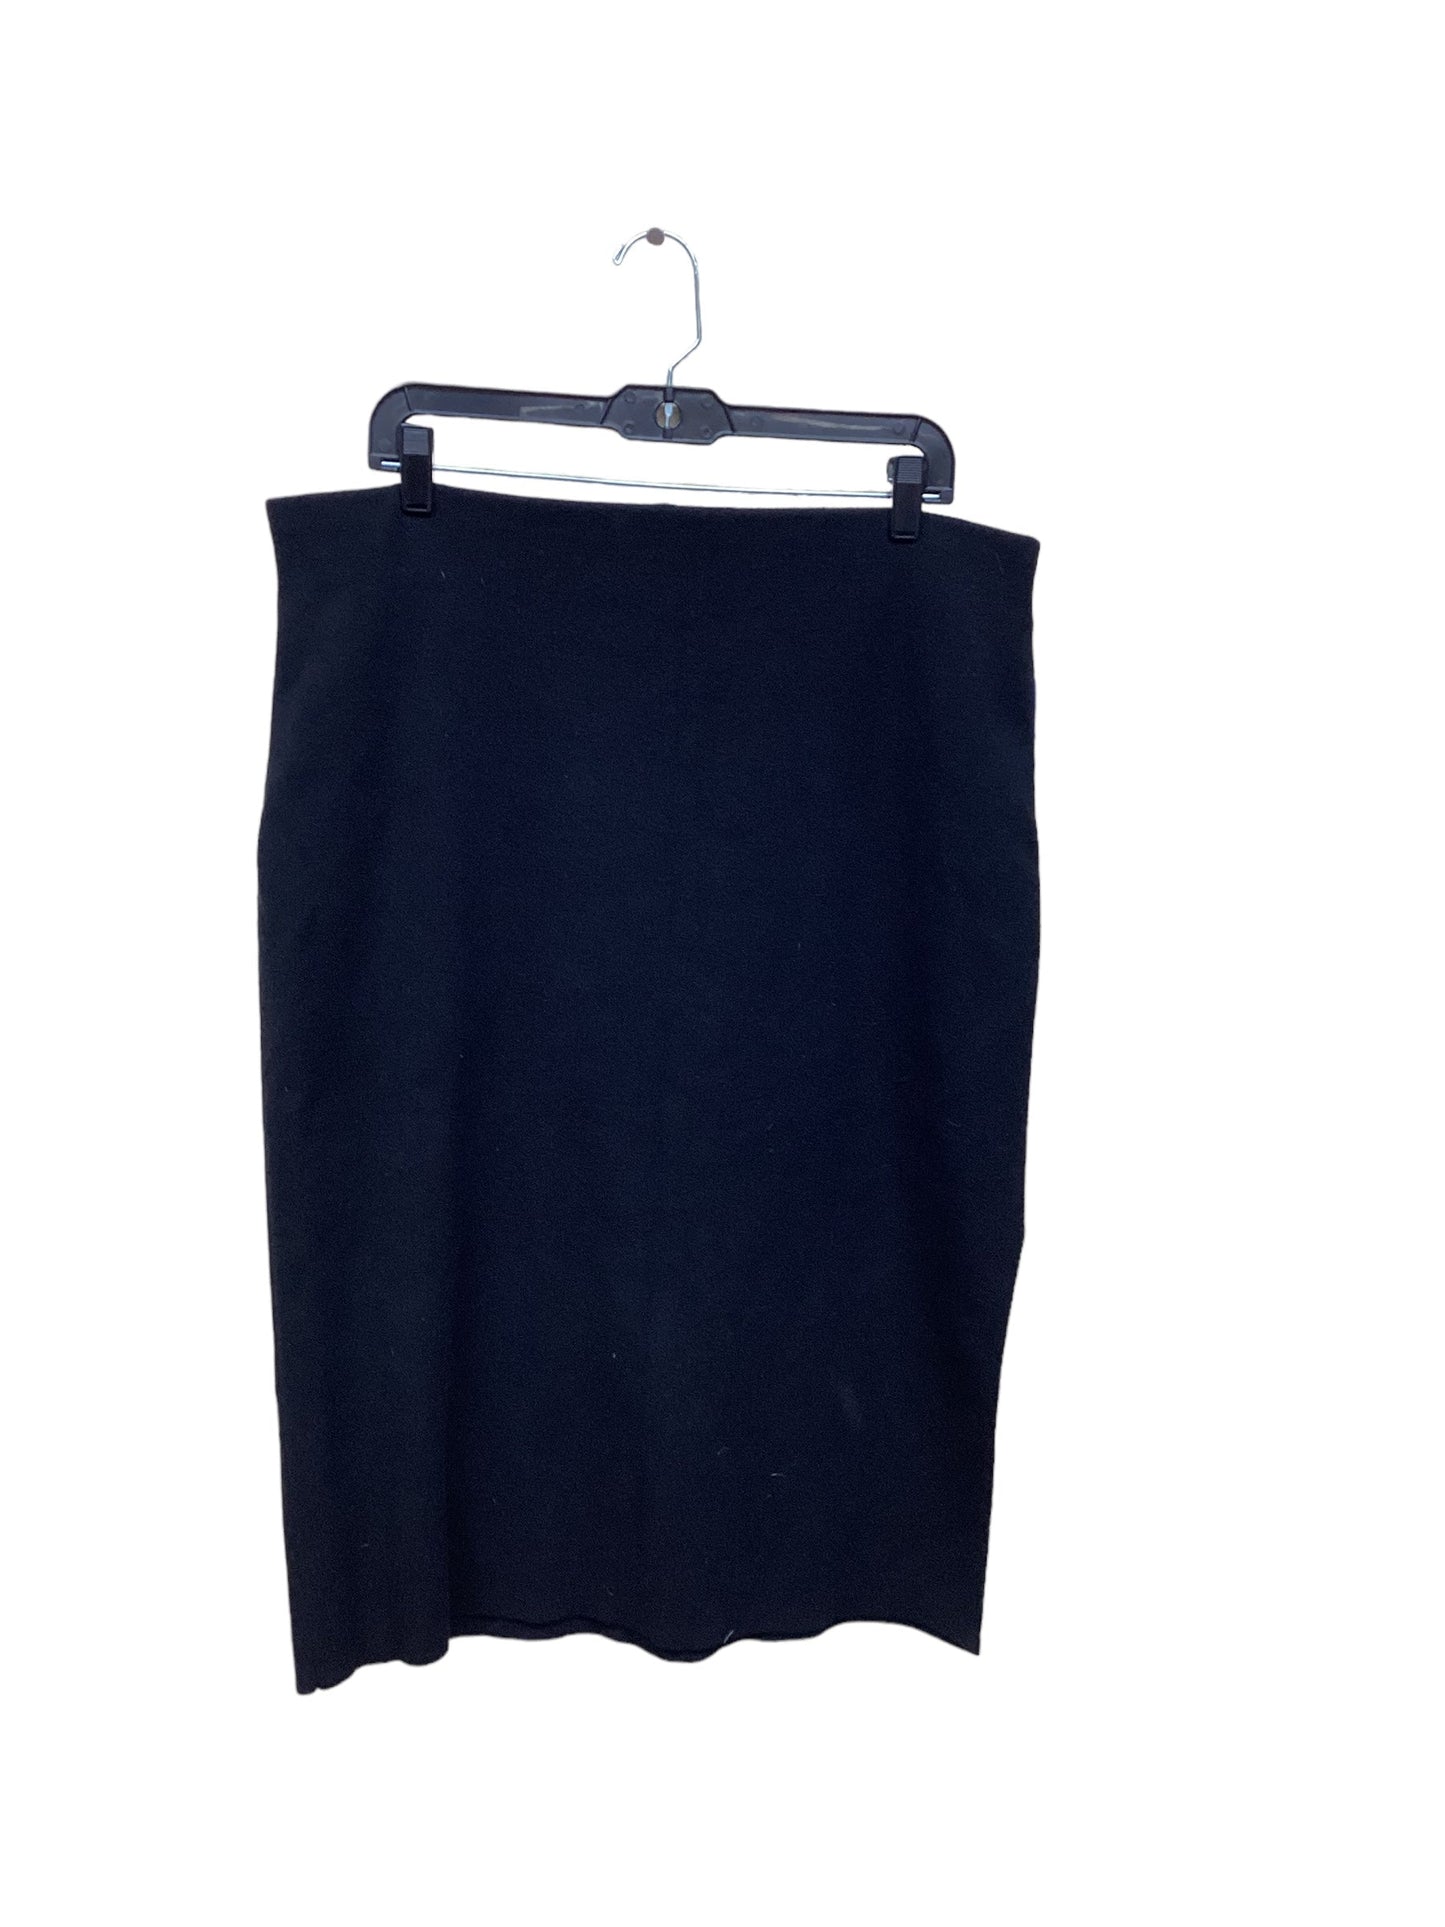 Skirt Midi By Express  Size: Xl